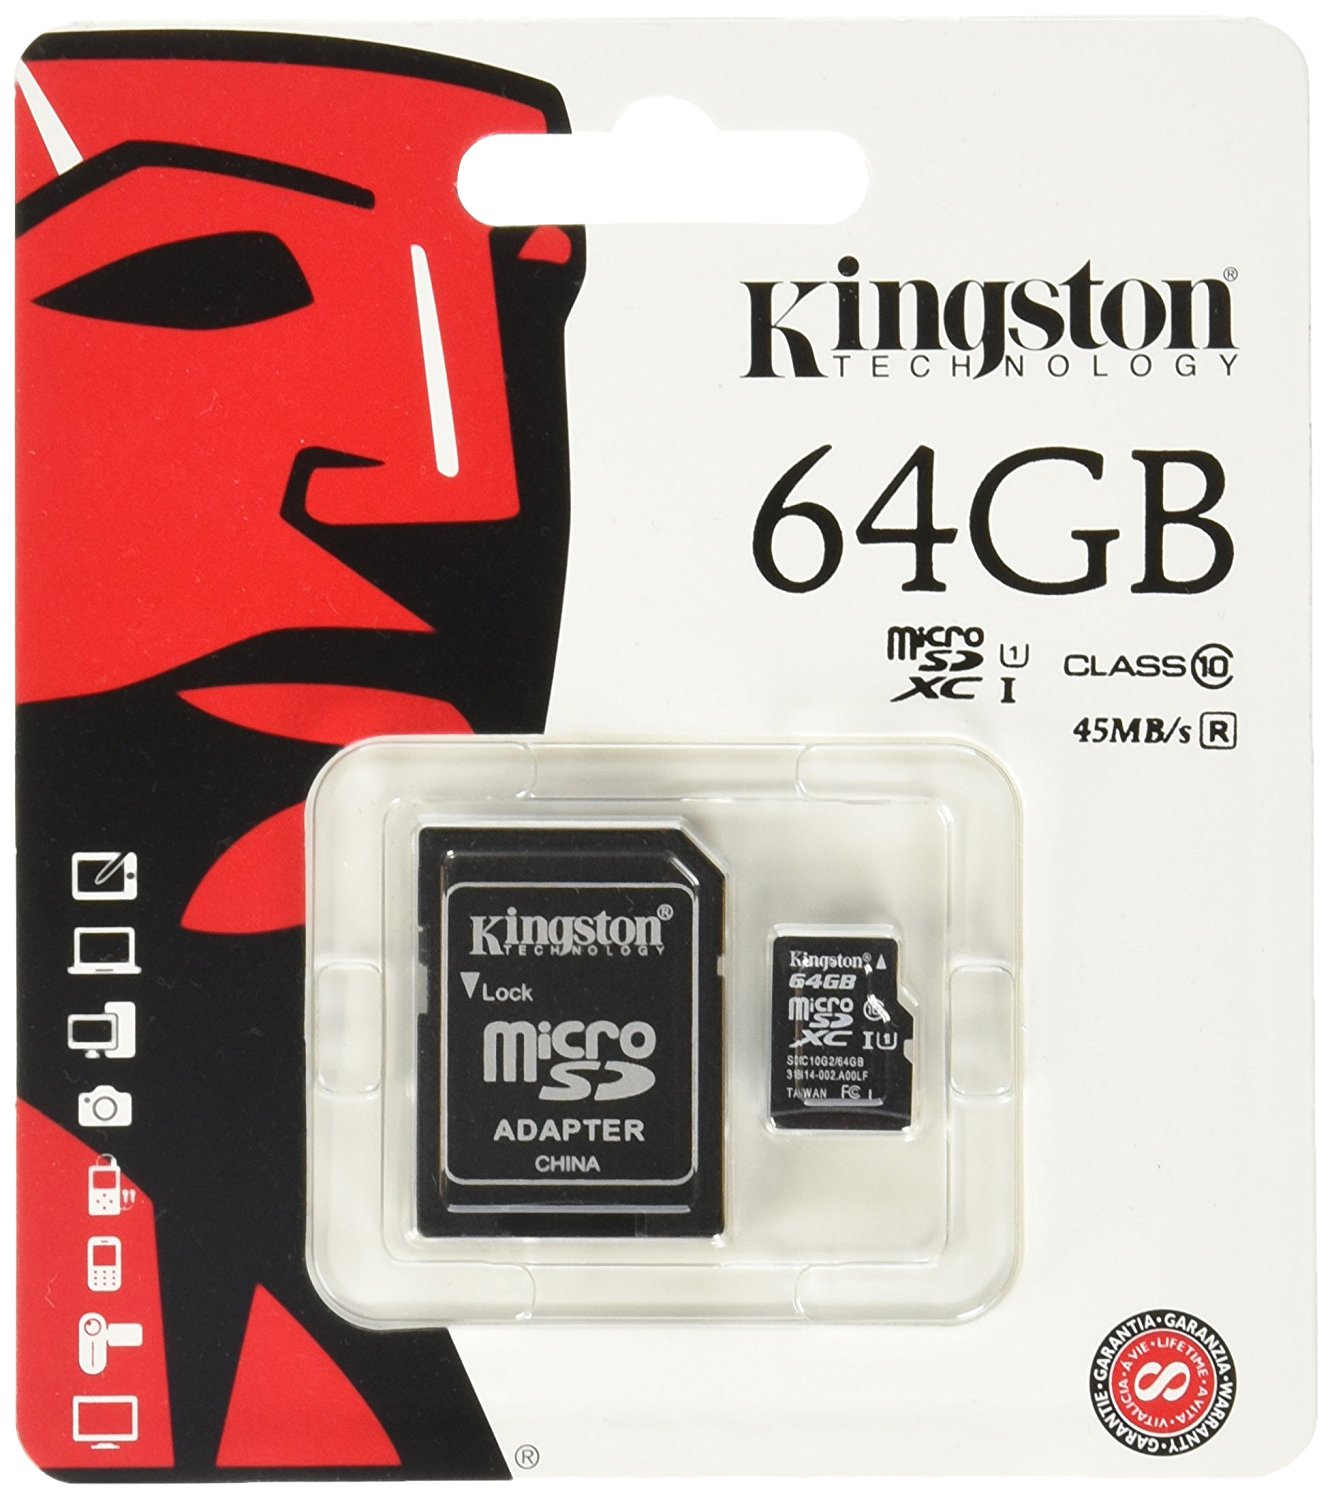 KINGSTON 64 GB Micro SDHC Memory Card with Adaptor - Click Image to Close